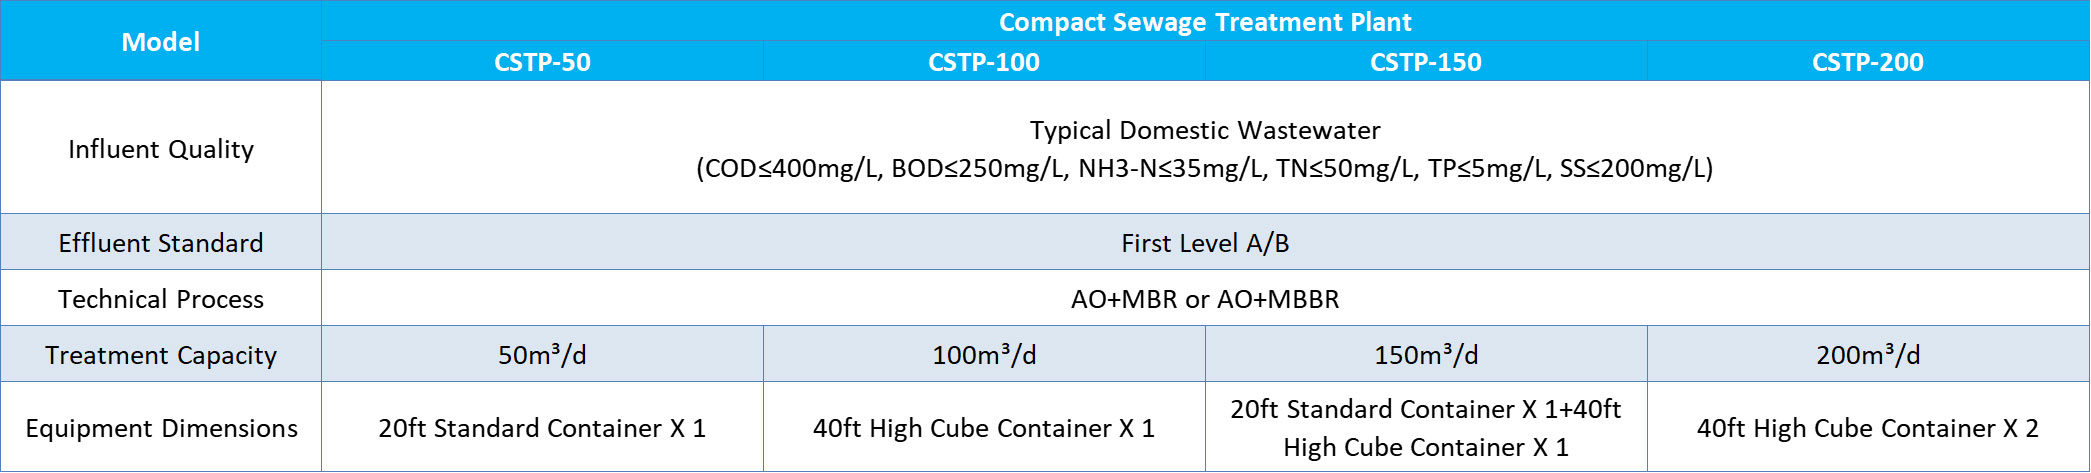 Compact Sewage Treatment Parameters